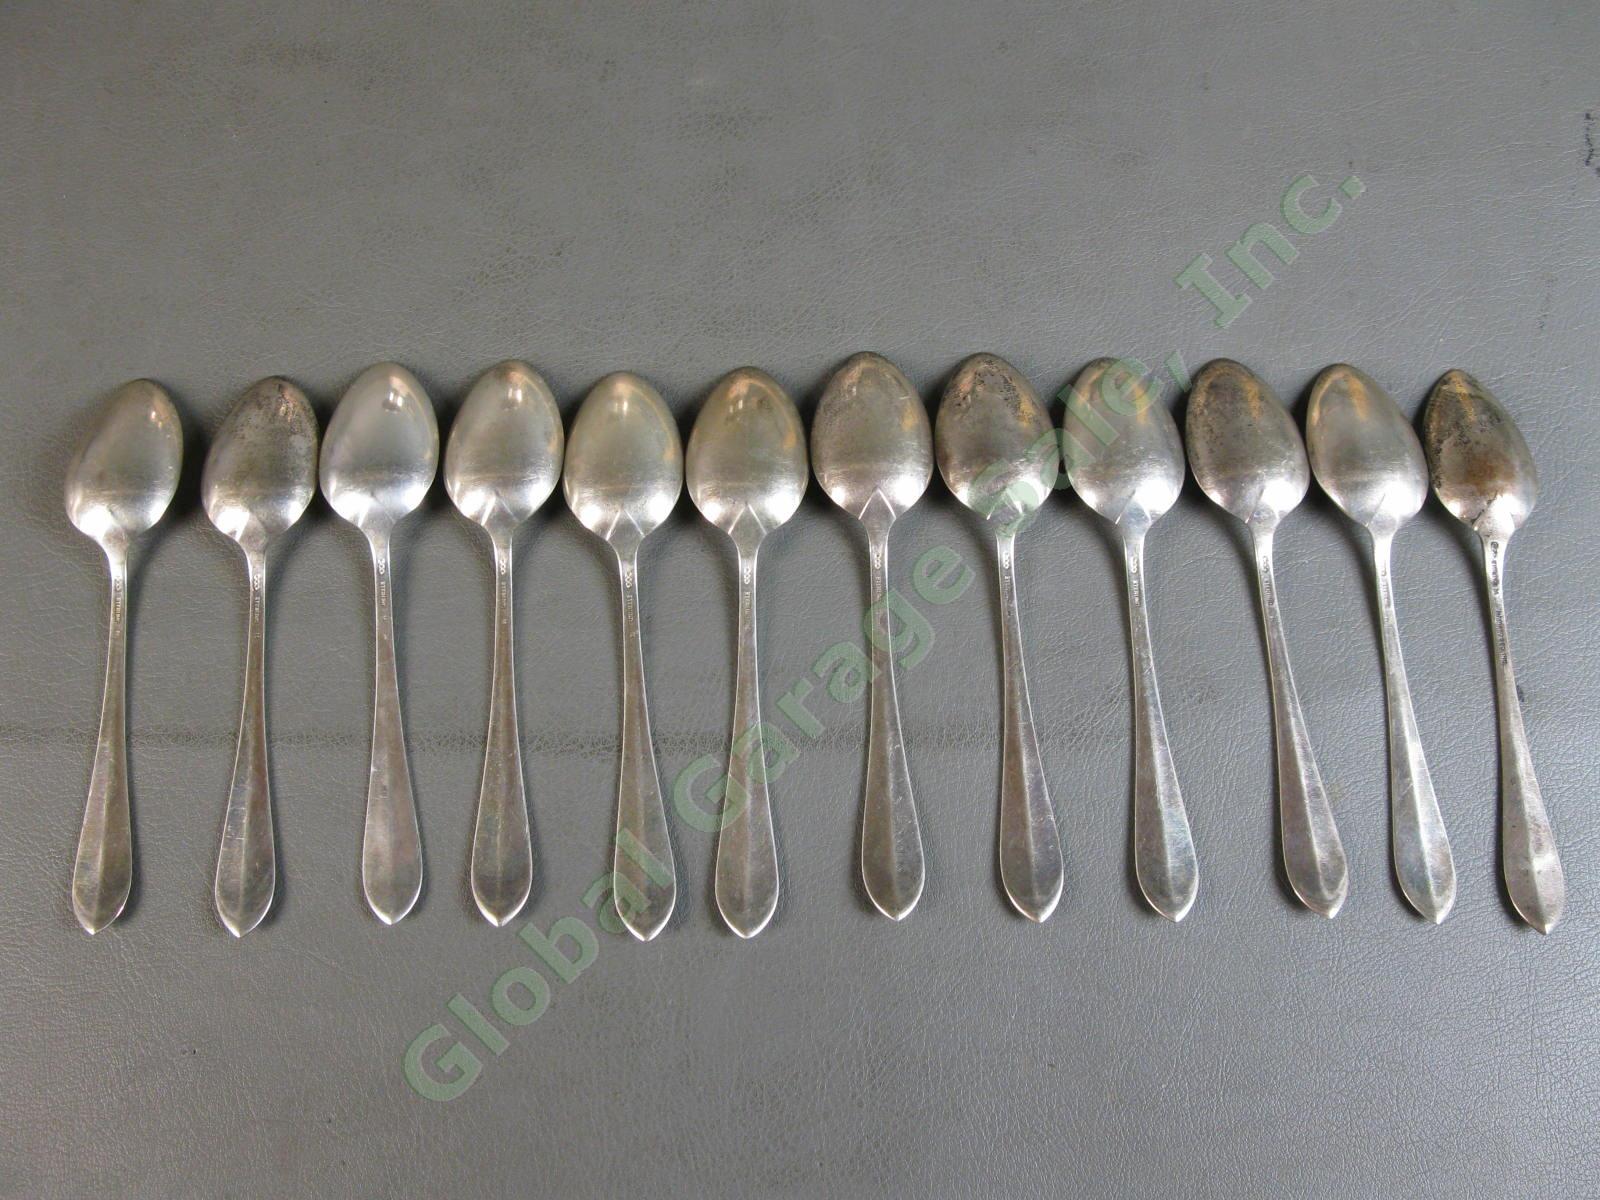 12 Dominick & Haff Pointed Antique Sterling Silver Teaspoon Spoon Set KEM 357g 4